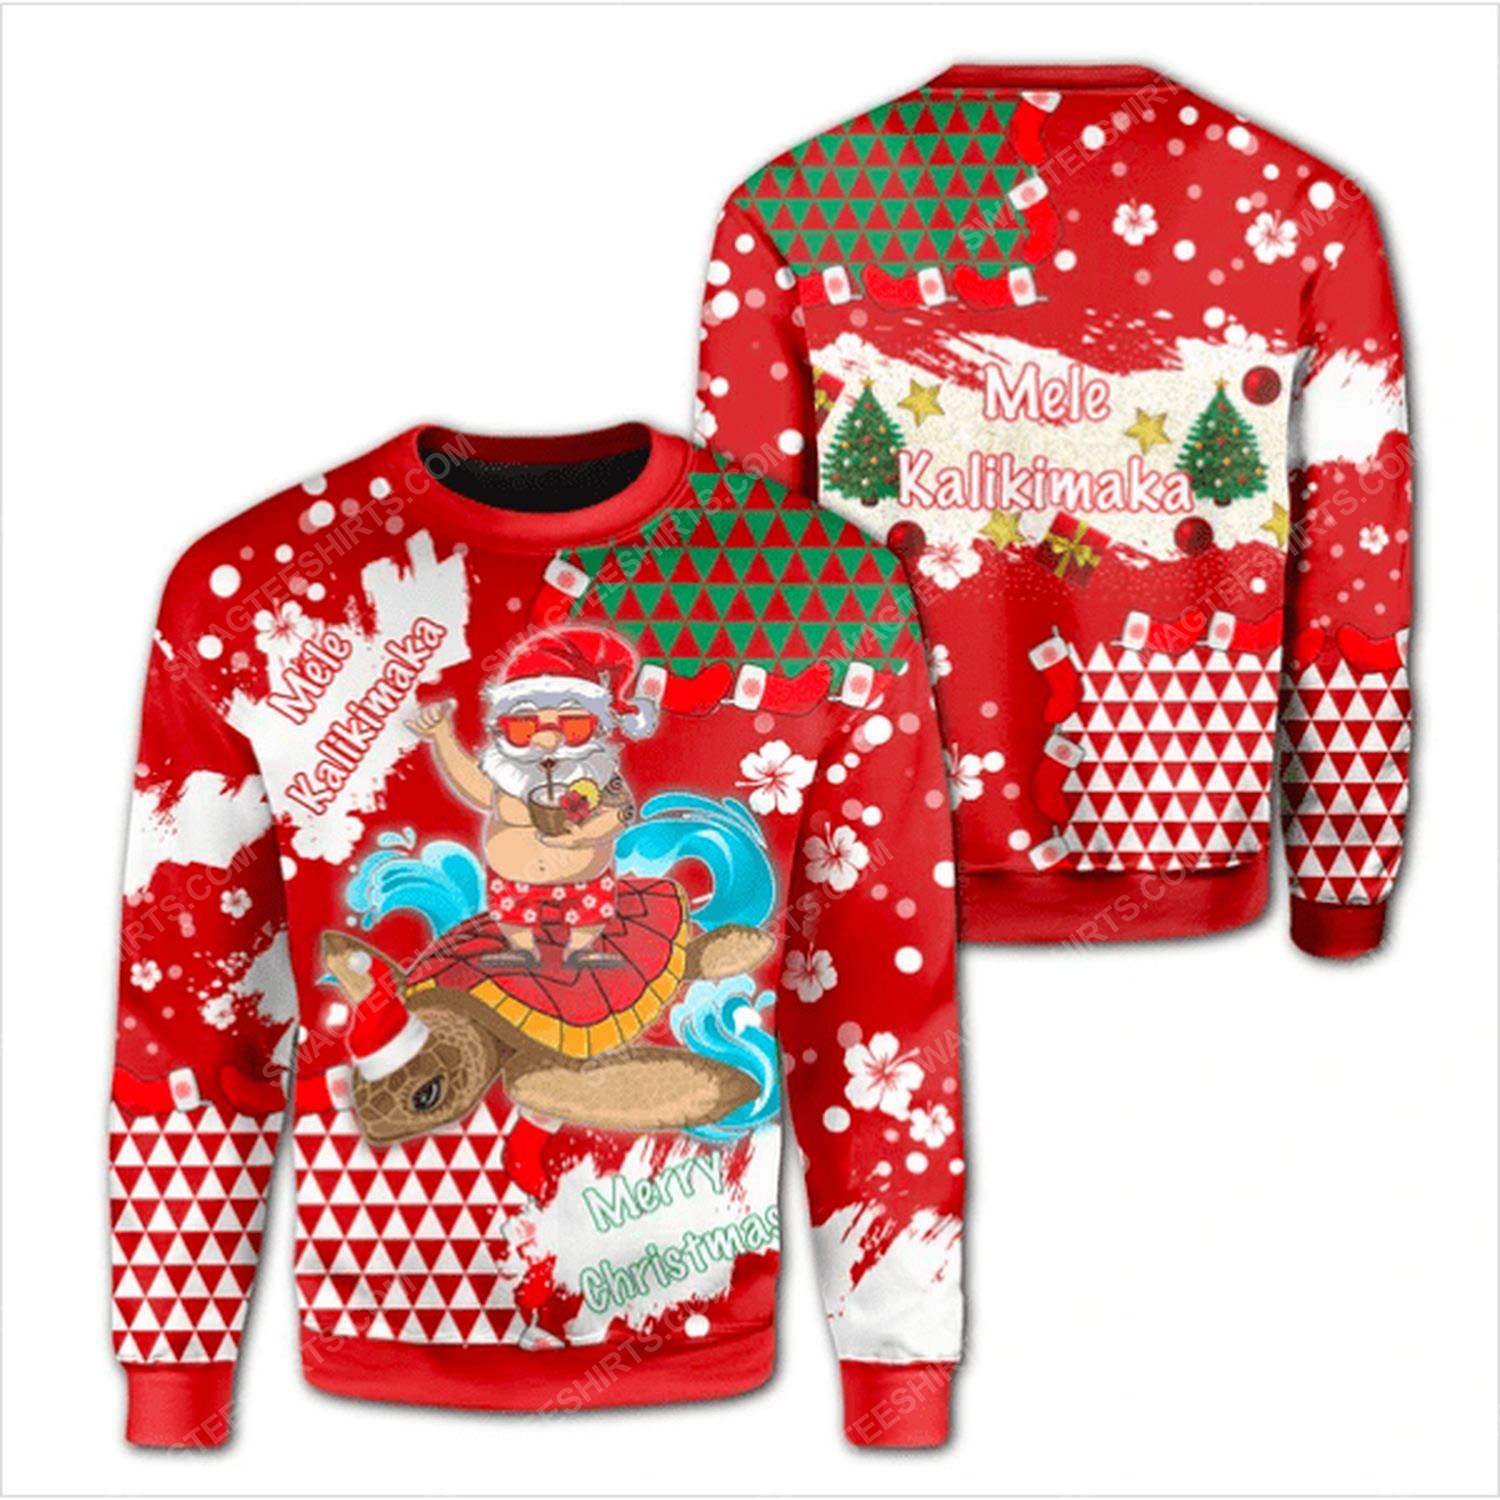 Santa surfing mele kalikimaka ugly christmas sweater 2 - Copy